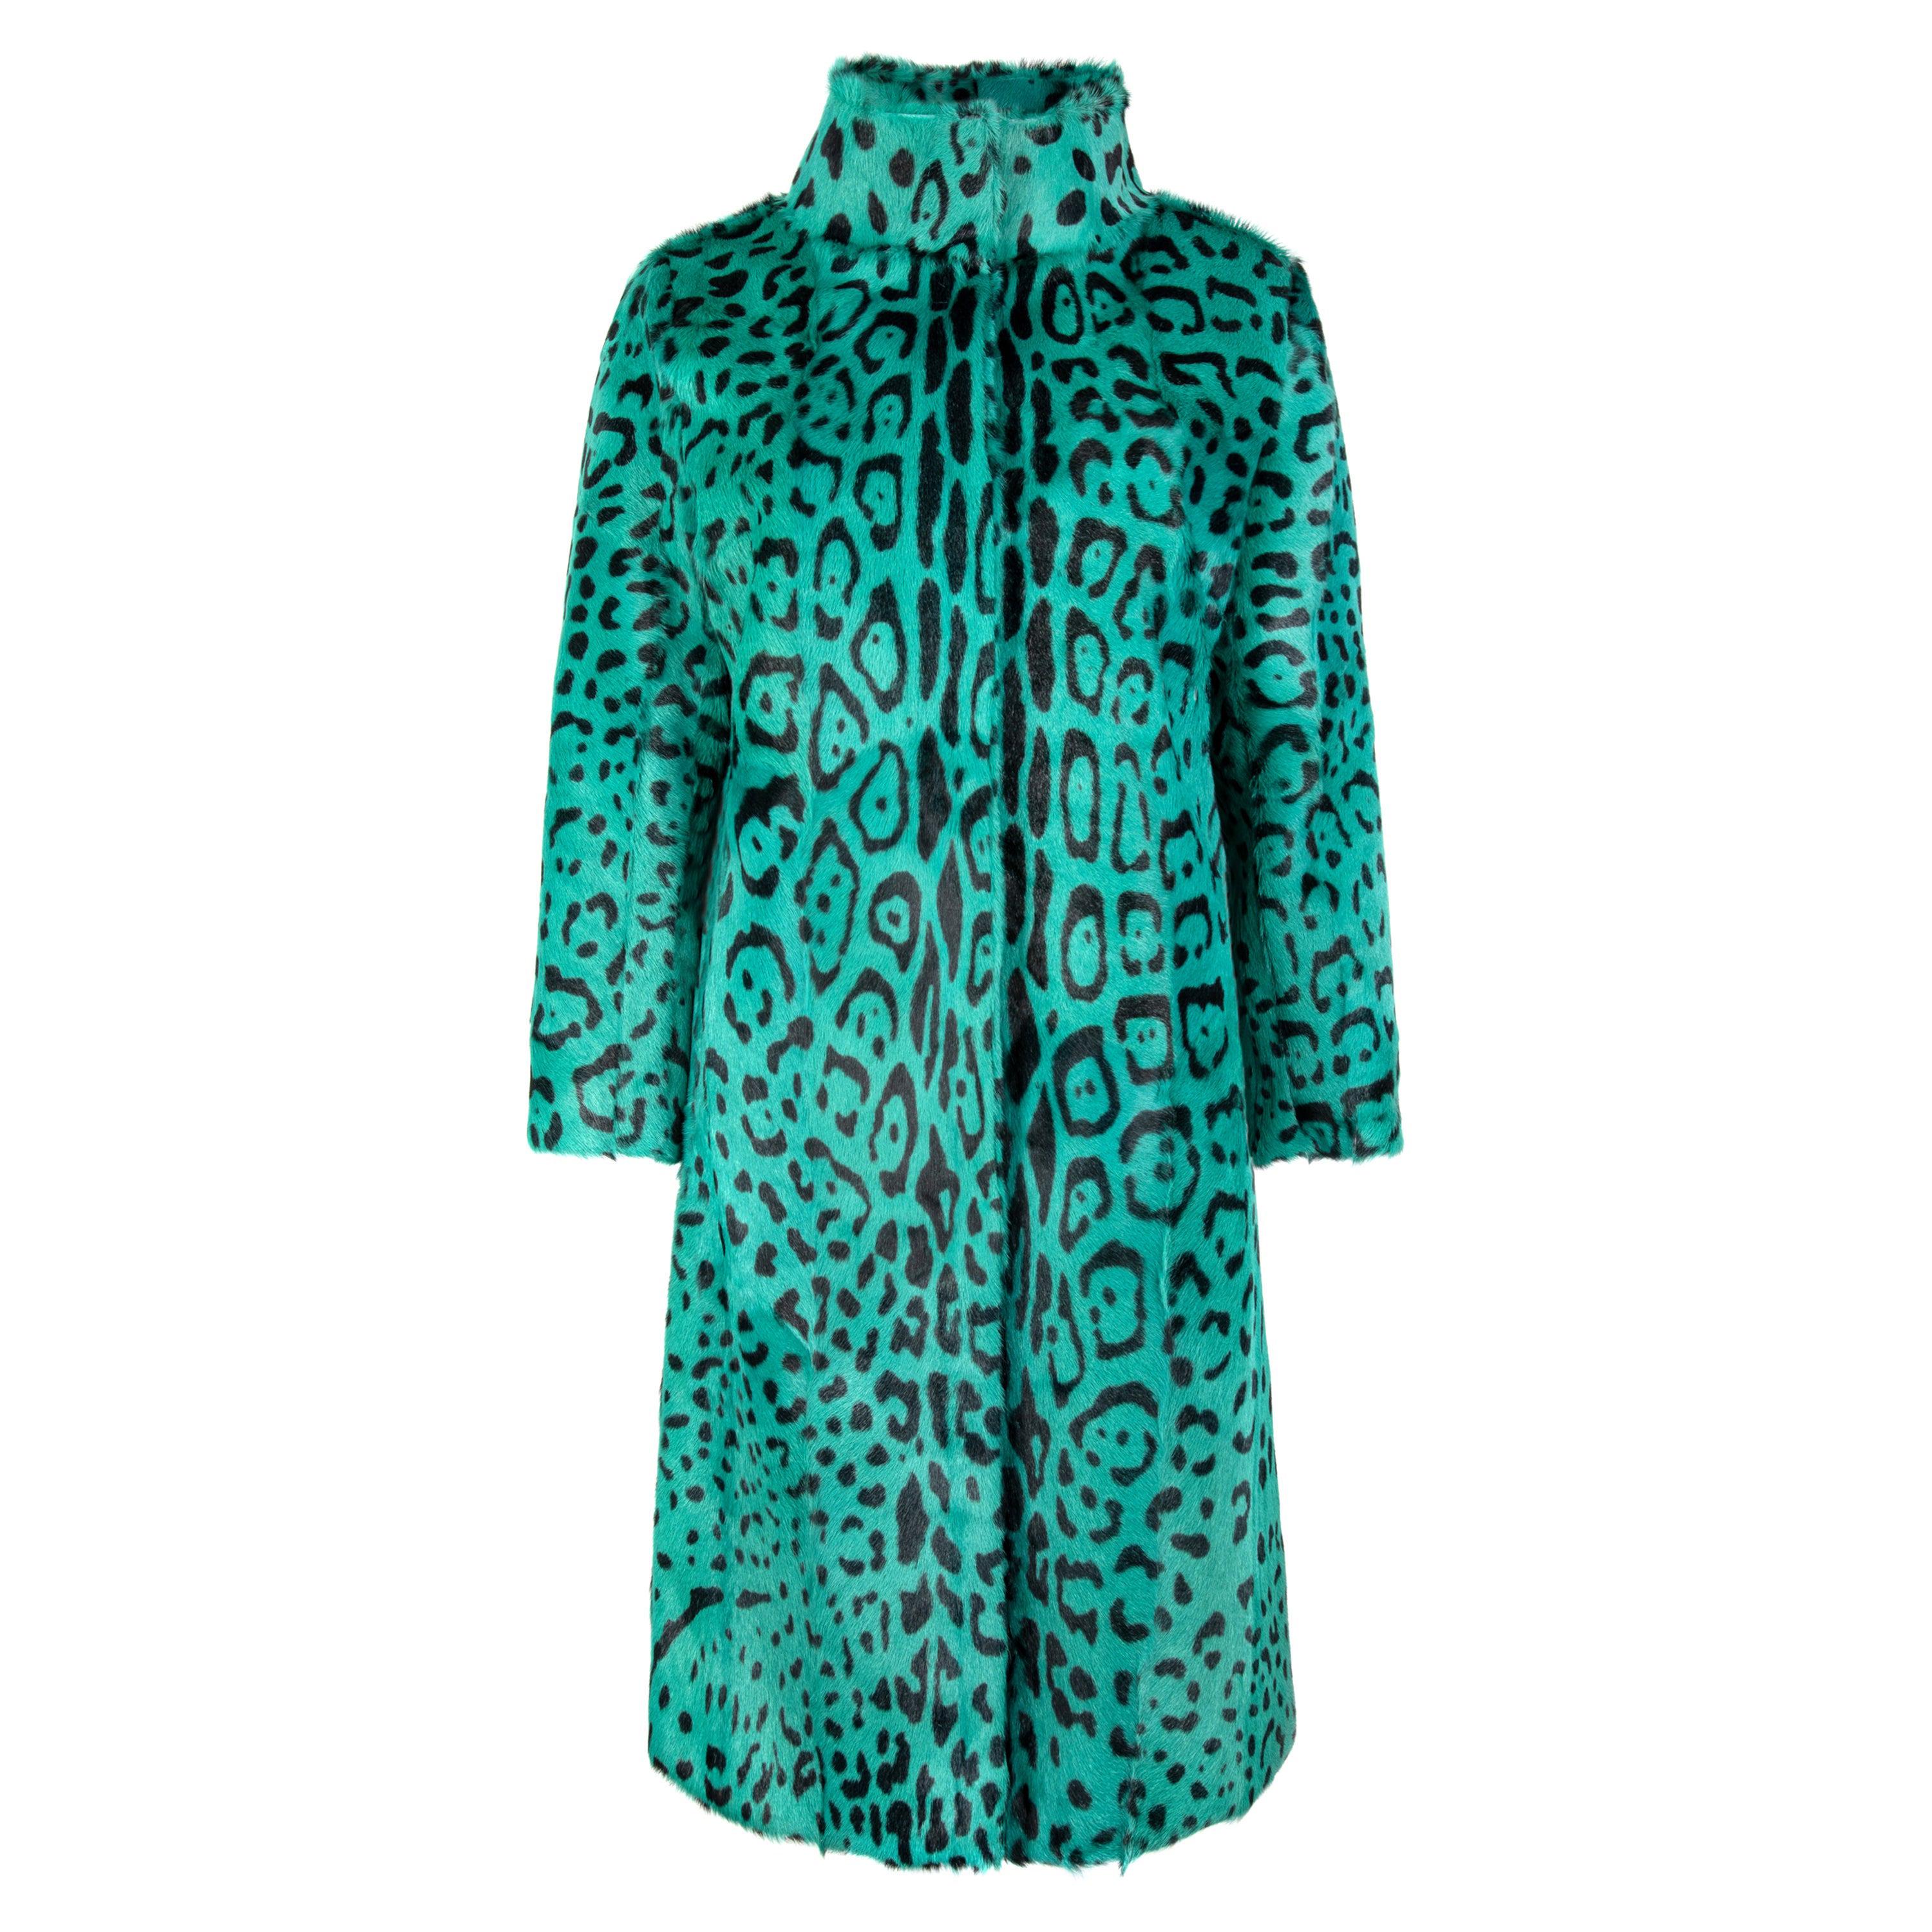 Verheyen London High Collar Green Leopard Print Coat Goat Hair Fur Size uk 10